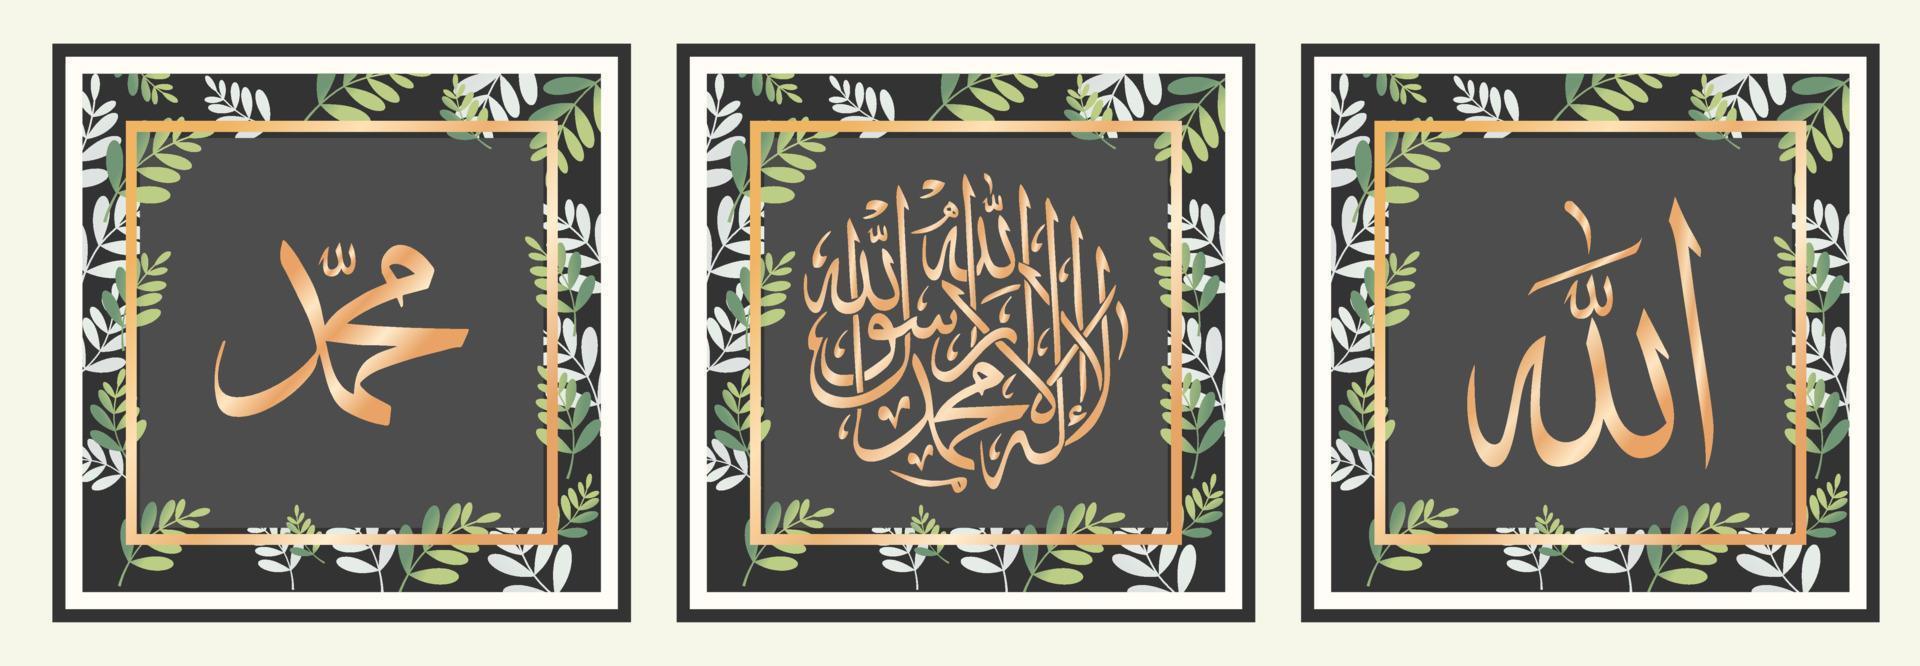 islamic calligraphy wall decoration vector